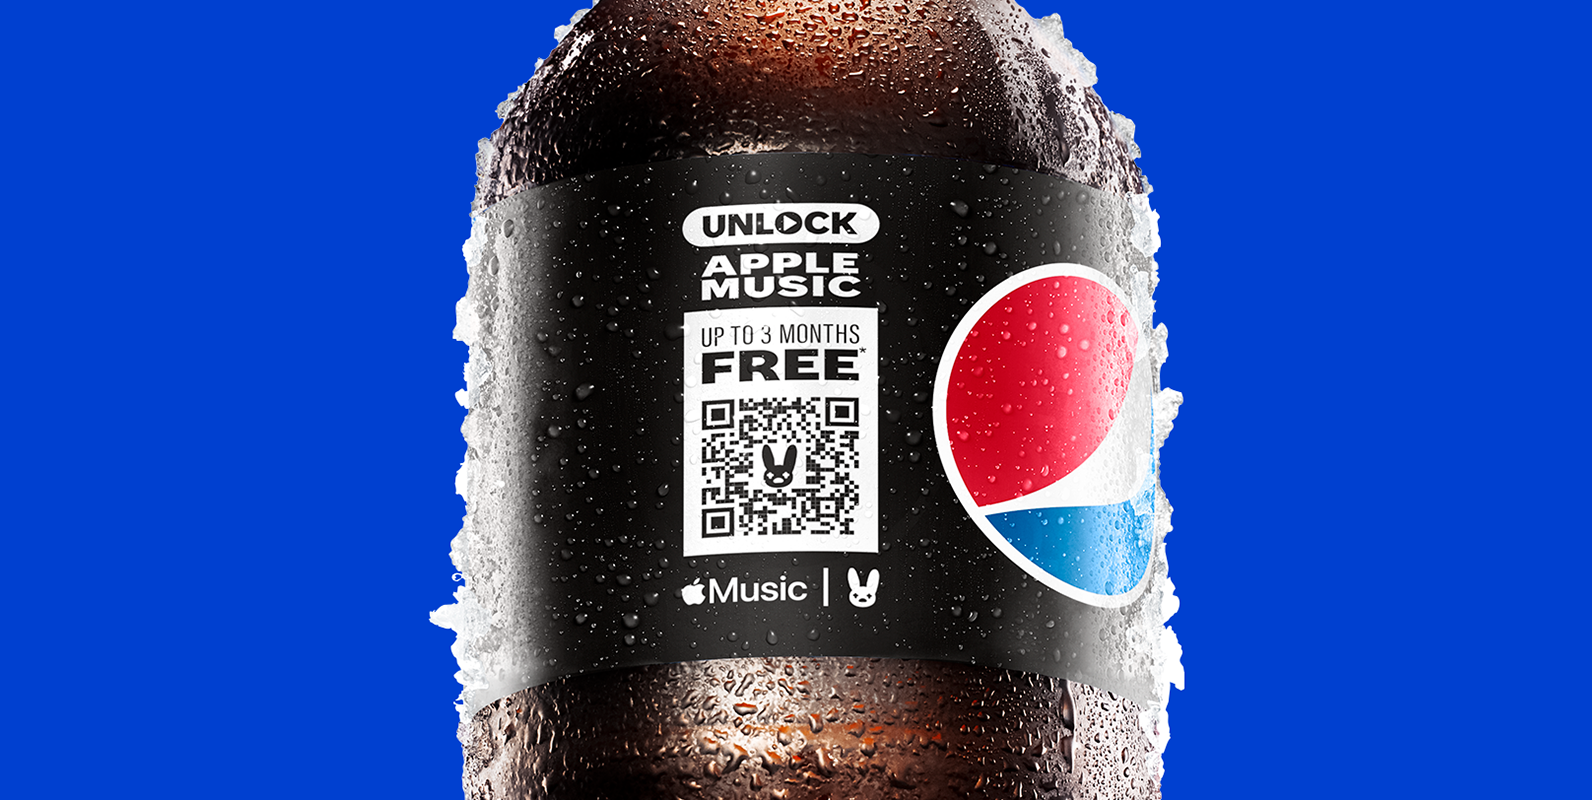 Pepsi's Summertime Packaging Unlocks Free Apple Music